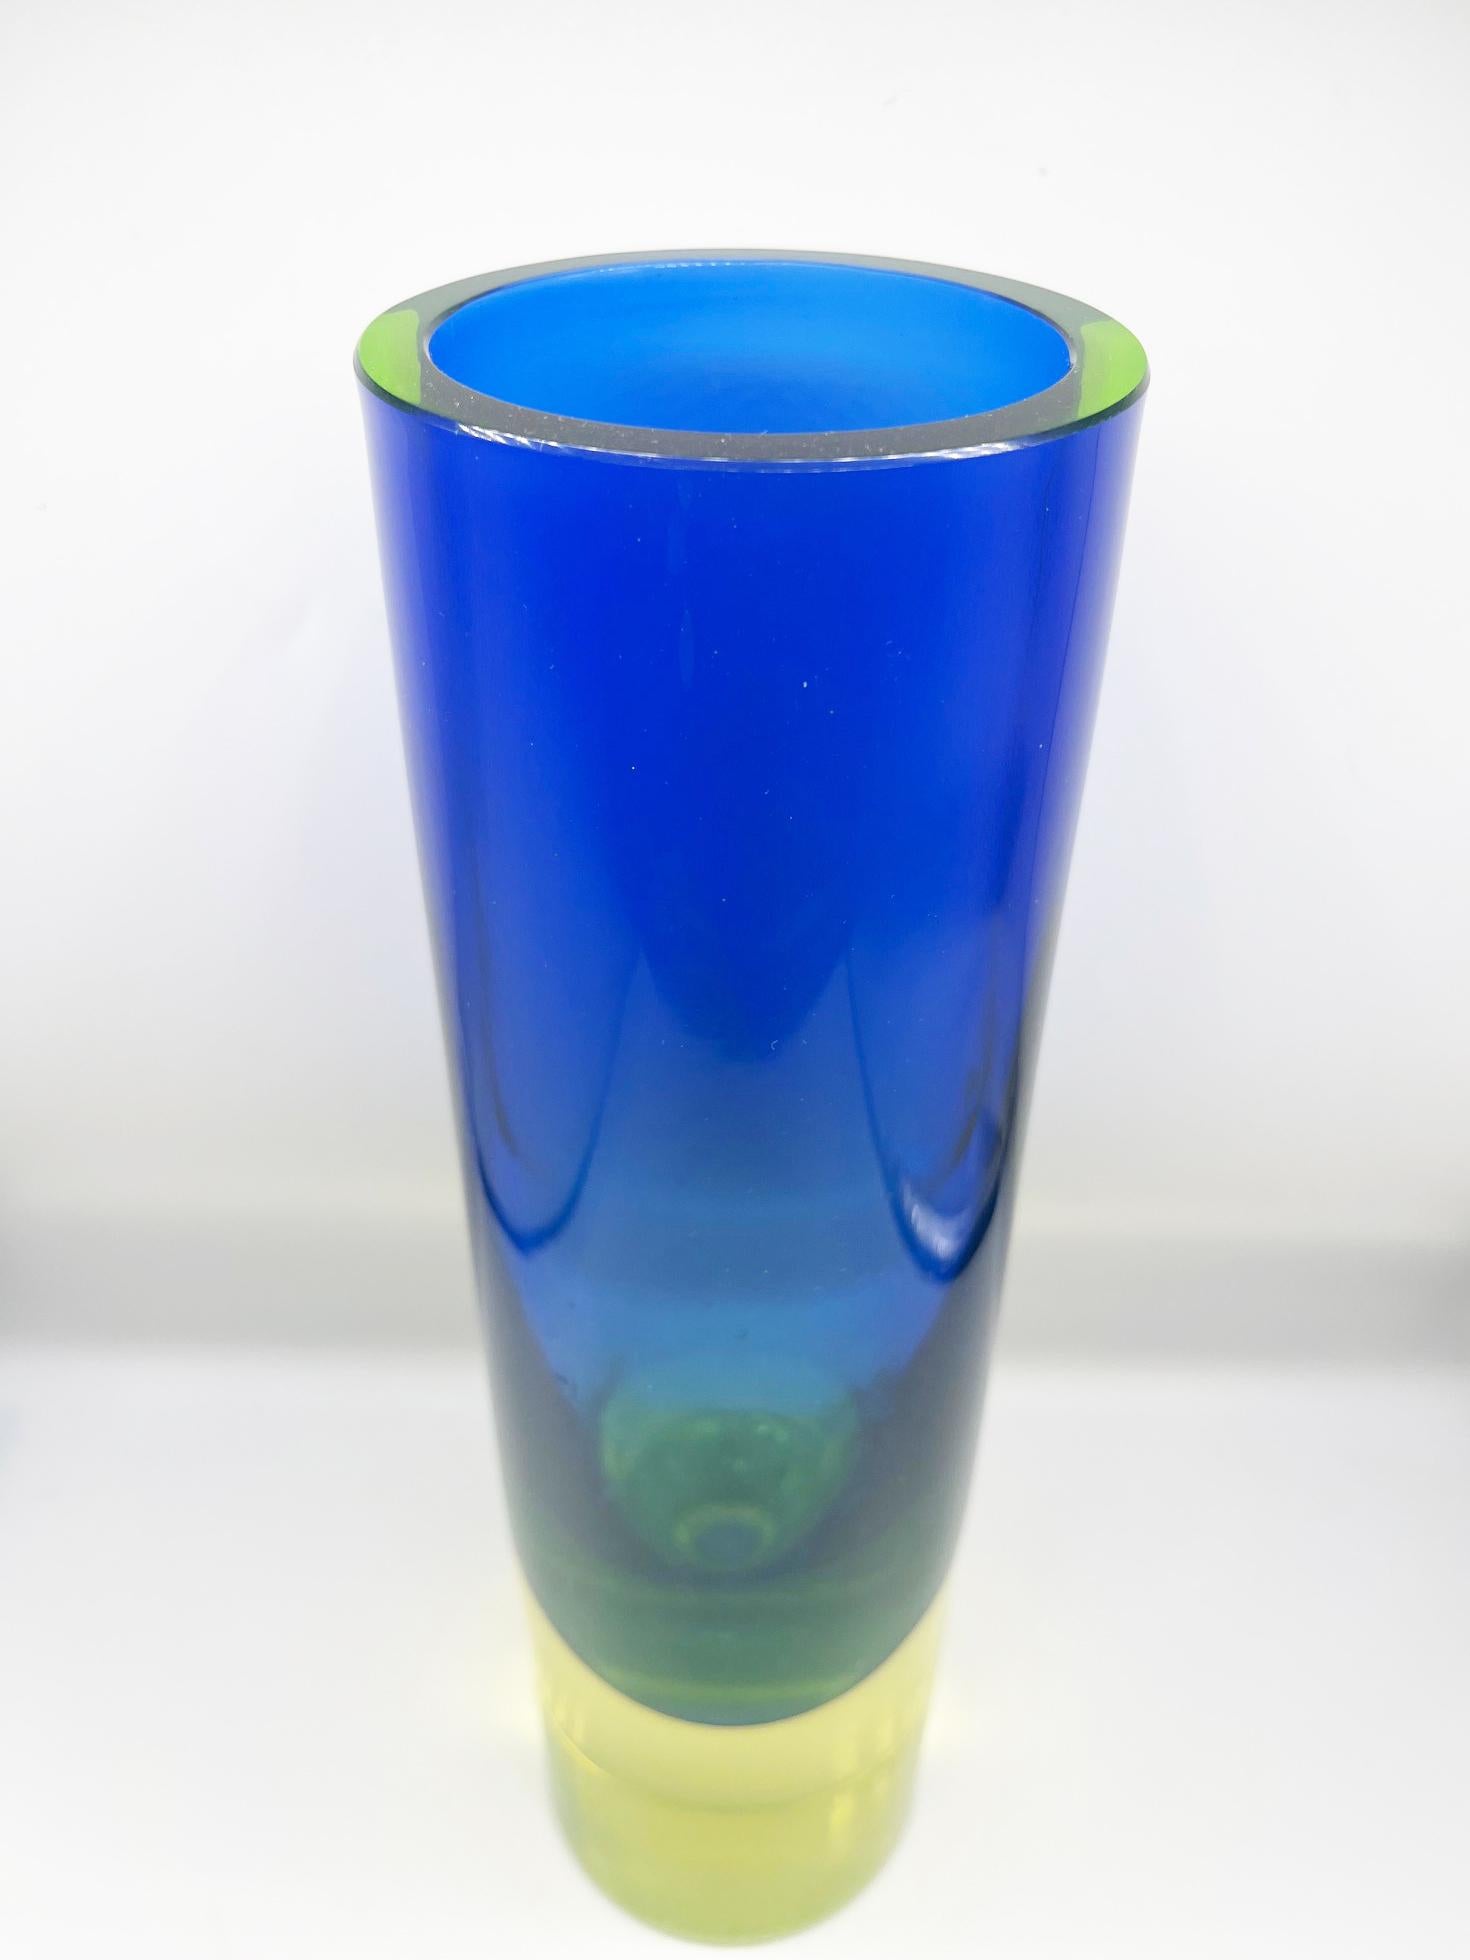 Murano Glass Flavio Poli Blue Vase Top Vintage 1950s -Murano Art- For Sale